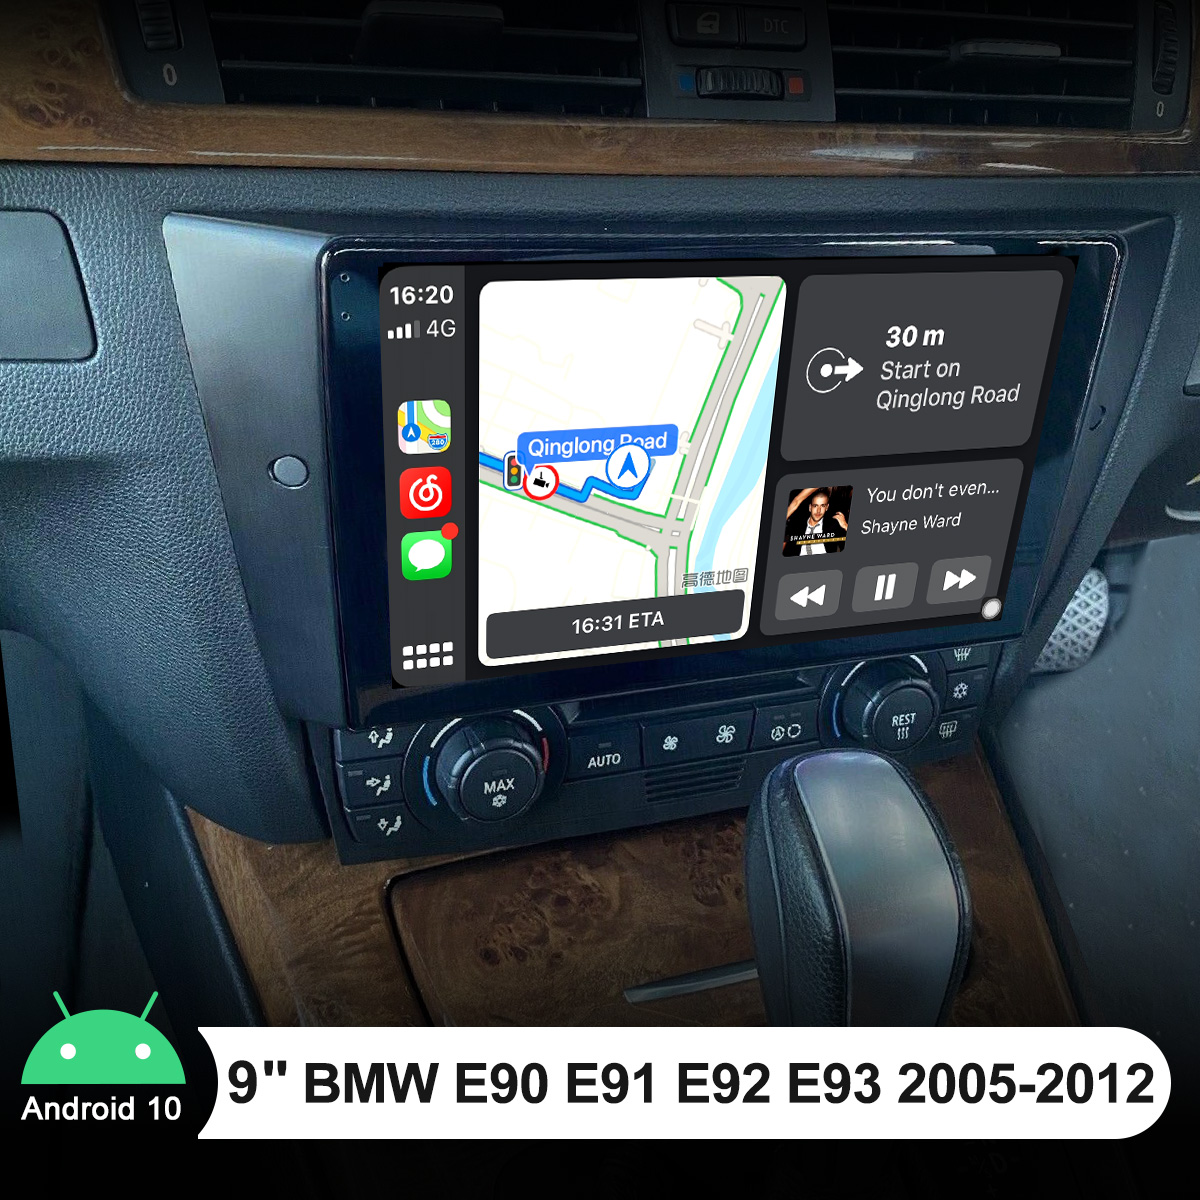 BMW E90/E91/E92/E93 Autoradio Android 10 System 9 inch IPS Screen Stereo with Bluetooth 5.1